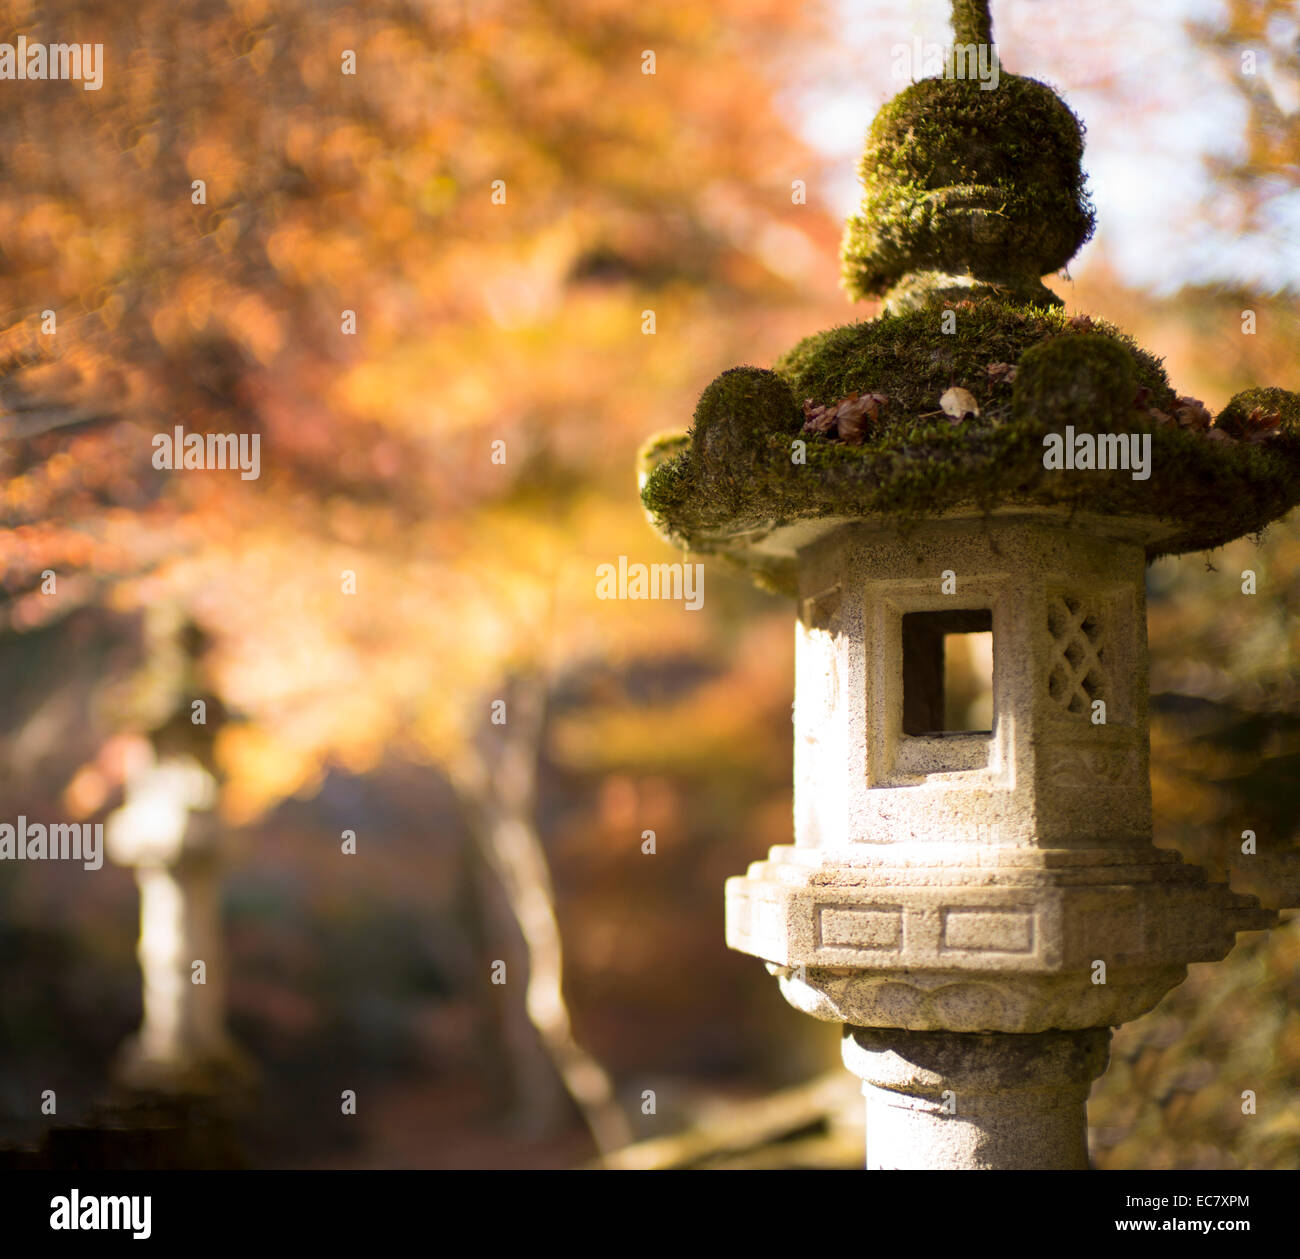 Japanese lantern in autumnal setting. Stock Photo